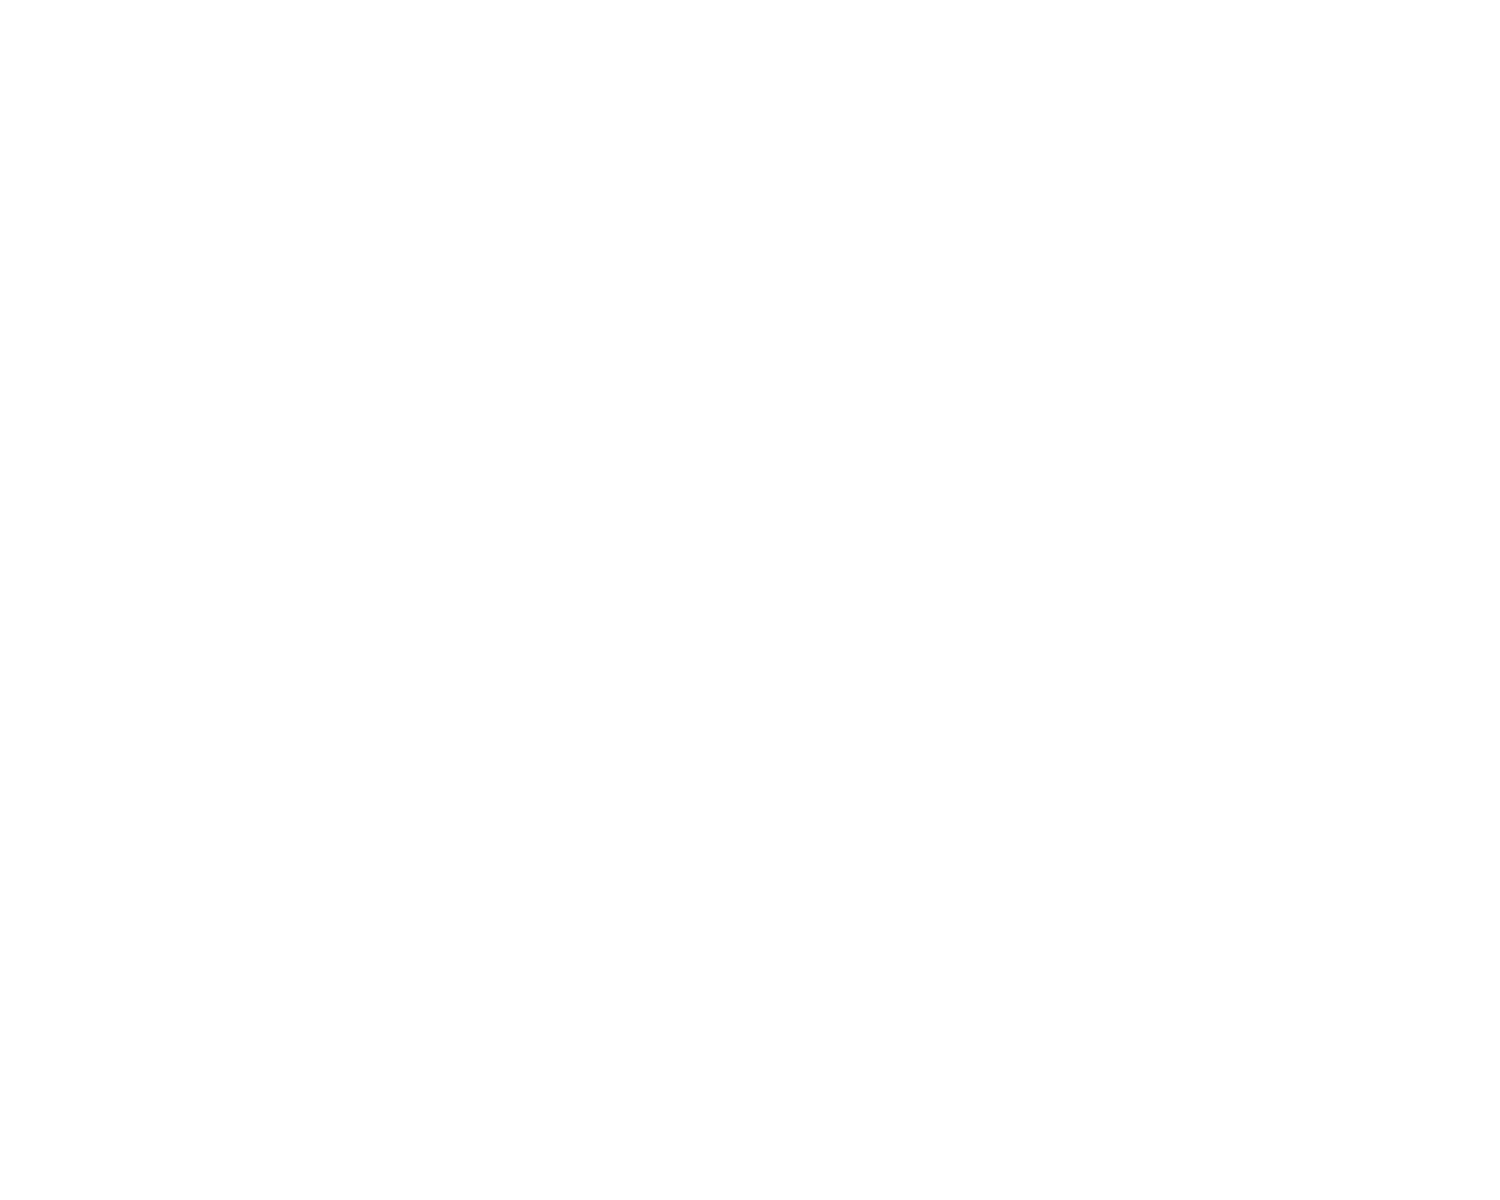 Munduk Cabins by Desa Hay